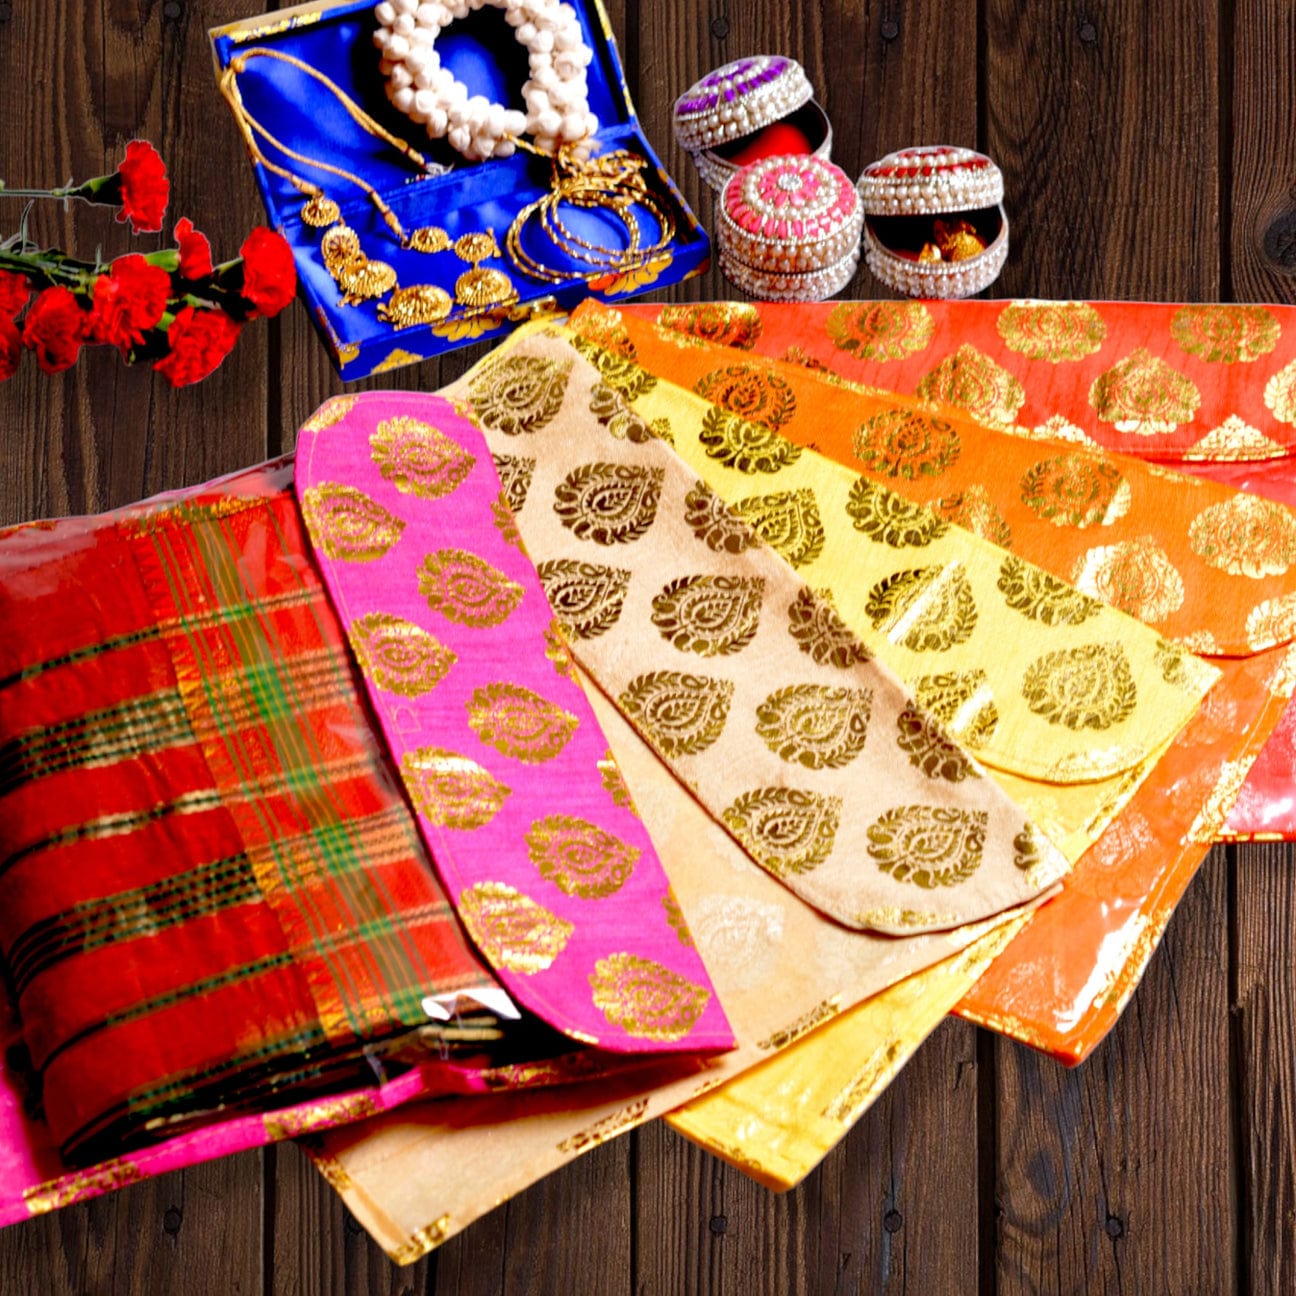 10 X GOLD Saree Bag Indian Wedding Suit Packing Storage Gift Bag  “IMPERFECTIONS” £14.99 - PicClick UK